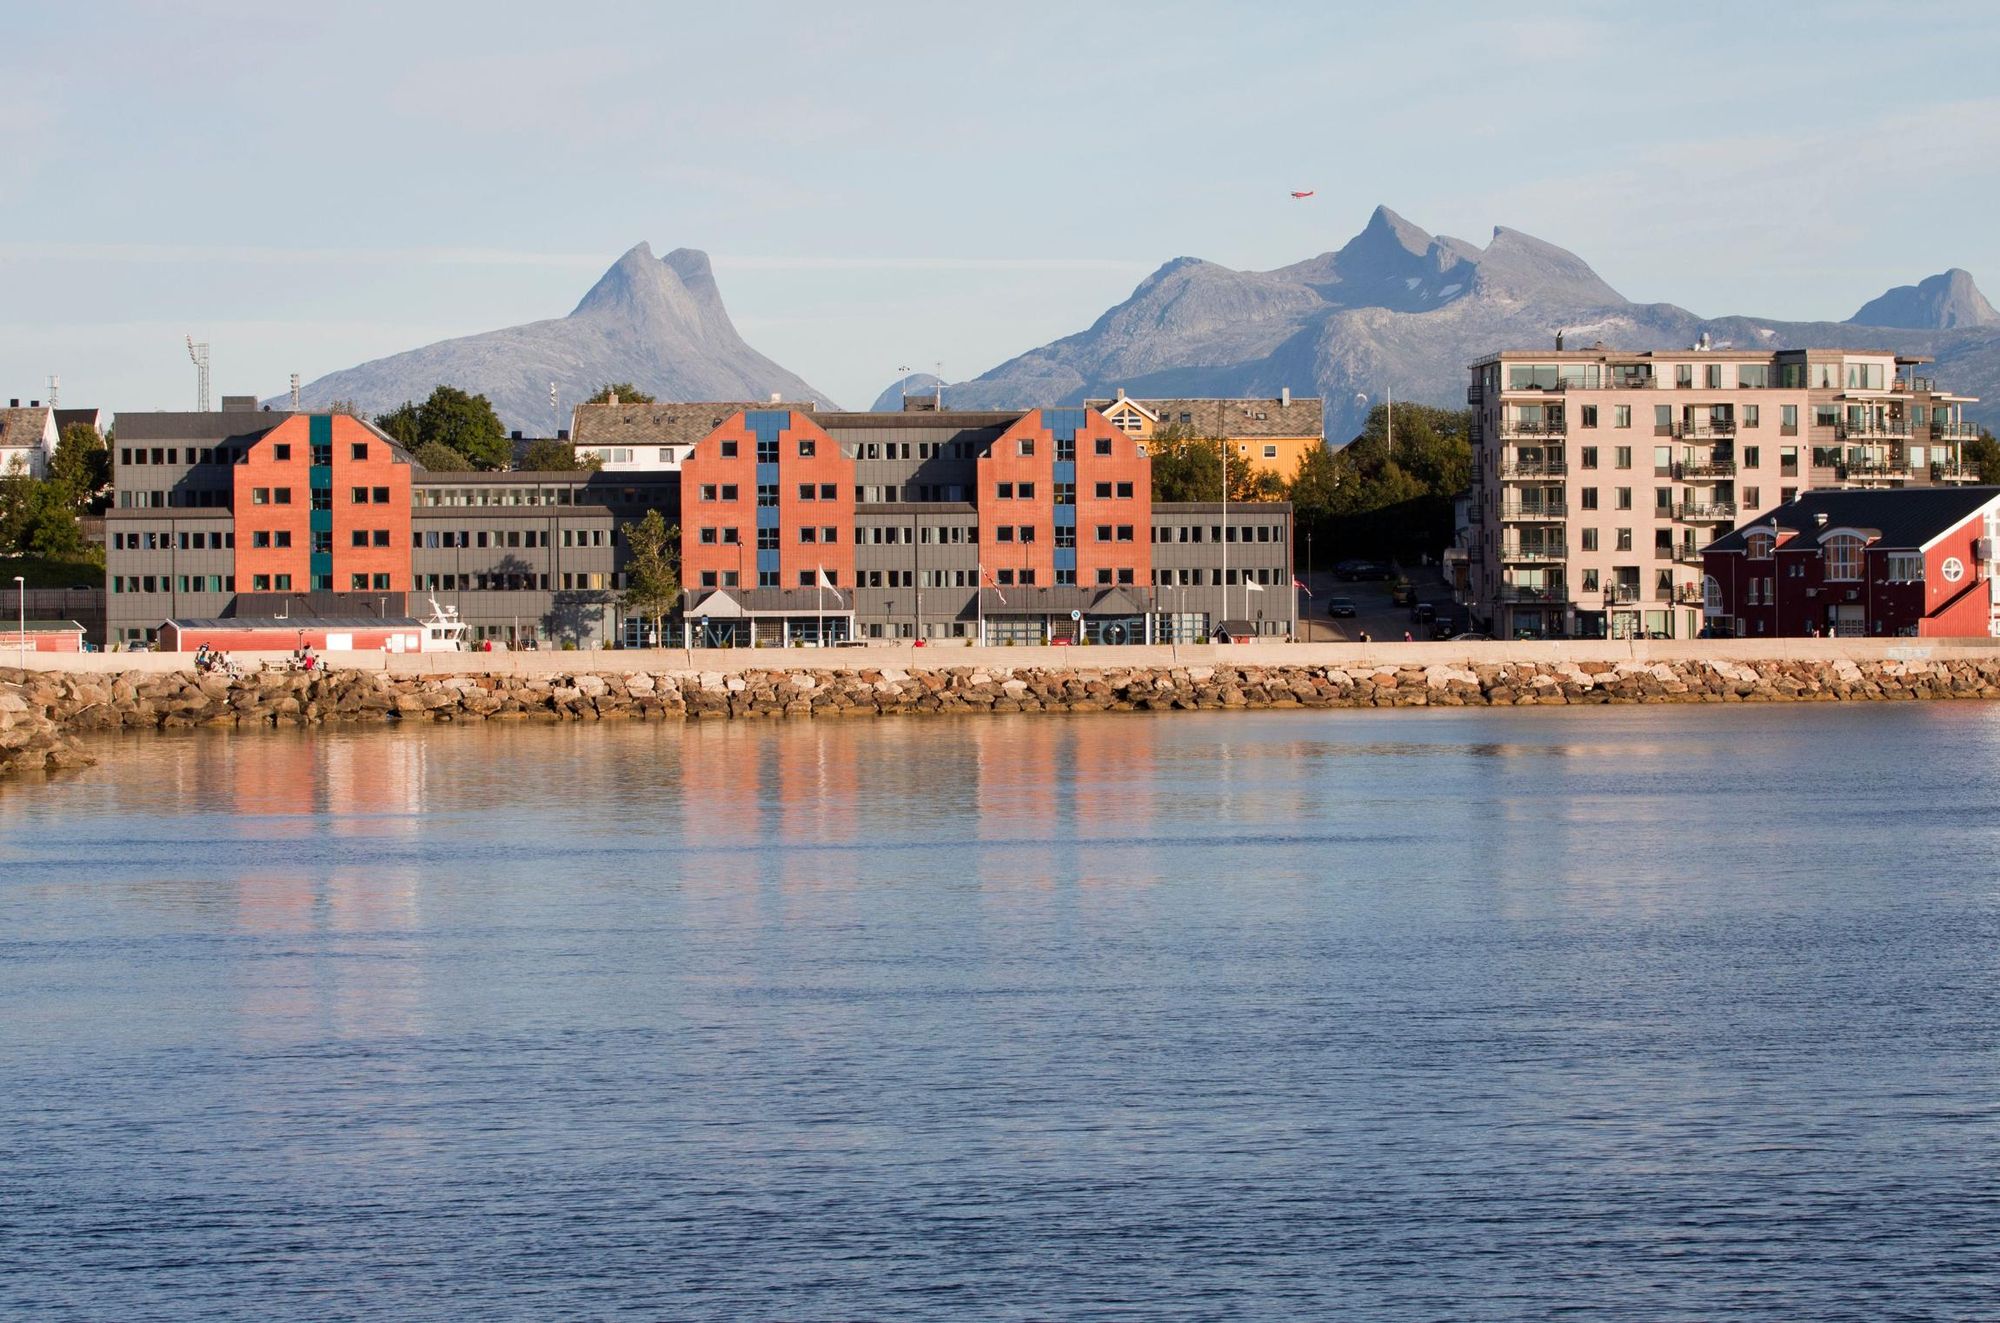 The Norwegian city of Bodø